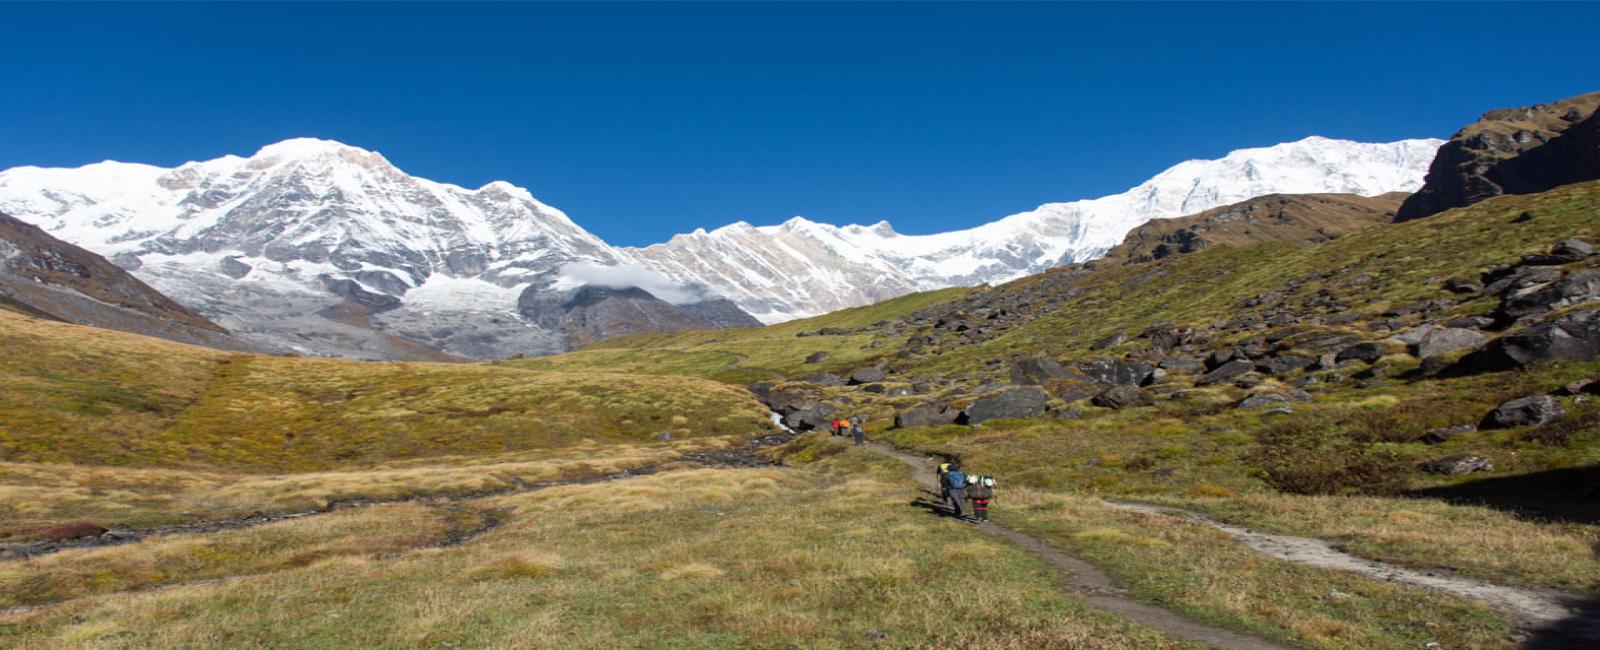 Annapurna Base Camp Trekking-14 Days